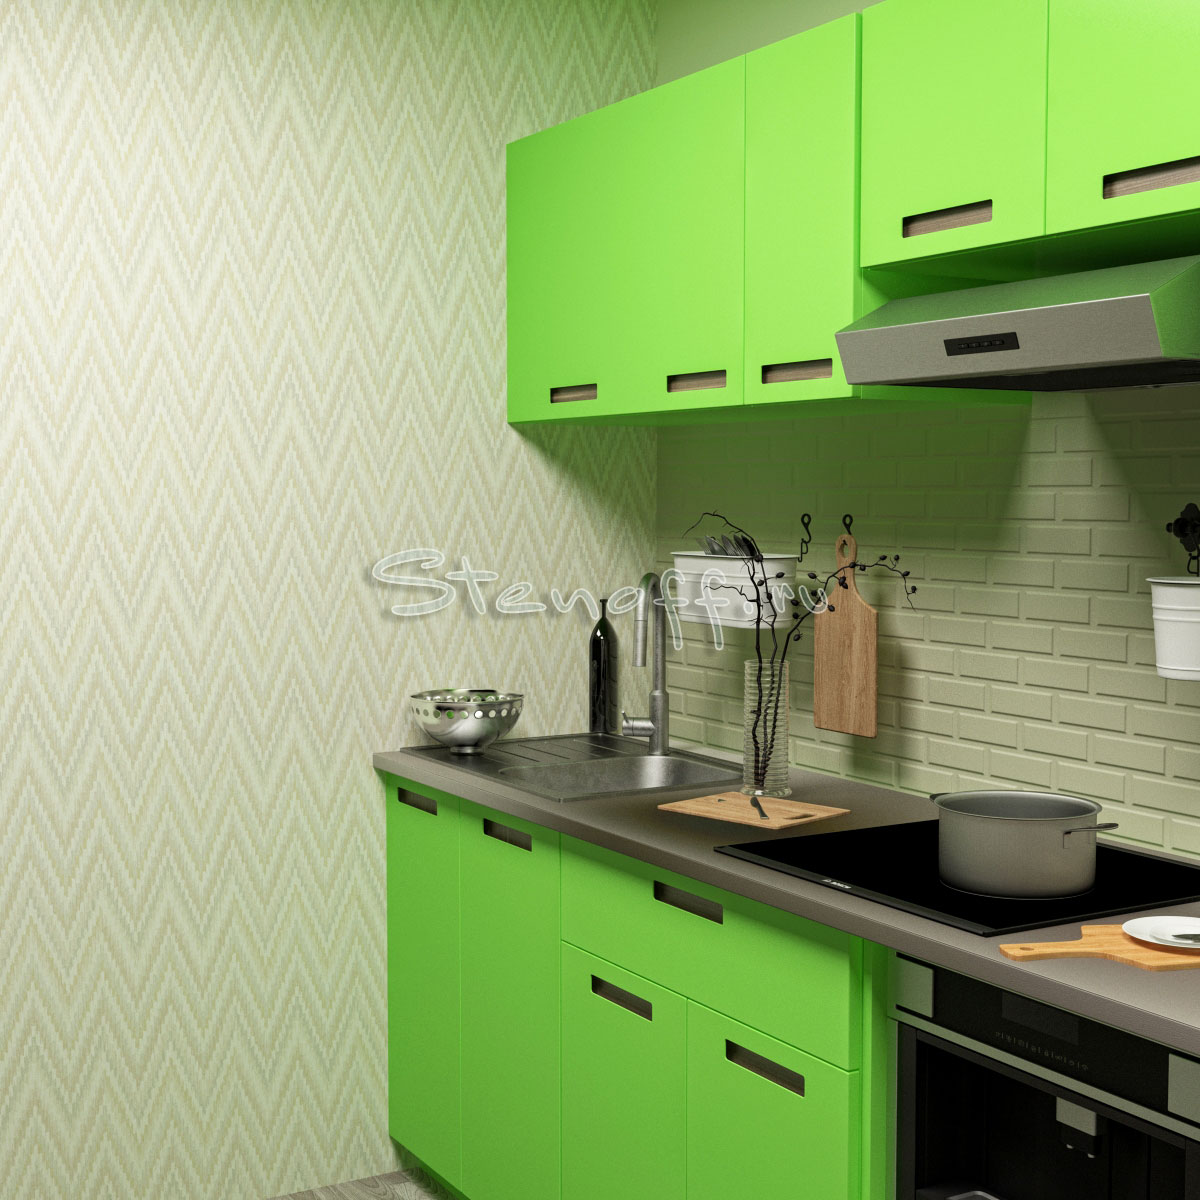 Зеленая кухня и обои с геометрическим рисунком><br></o:p></p>






<p style=